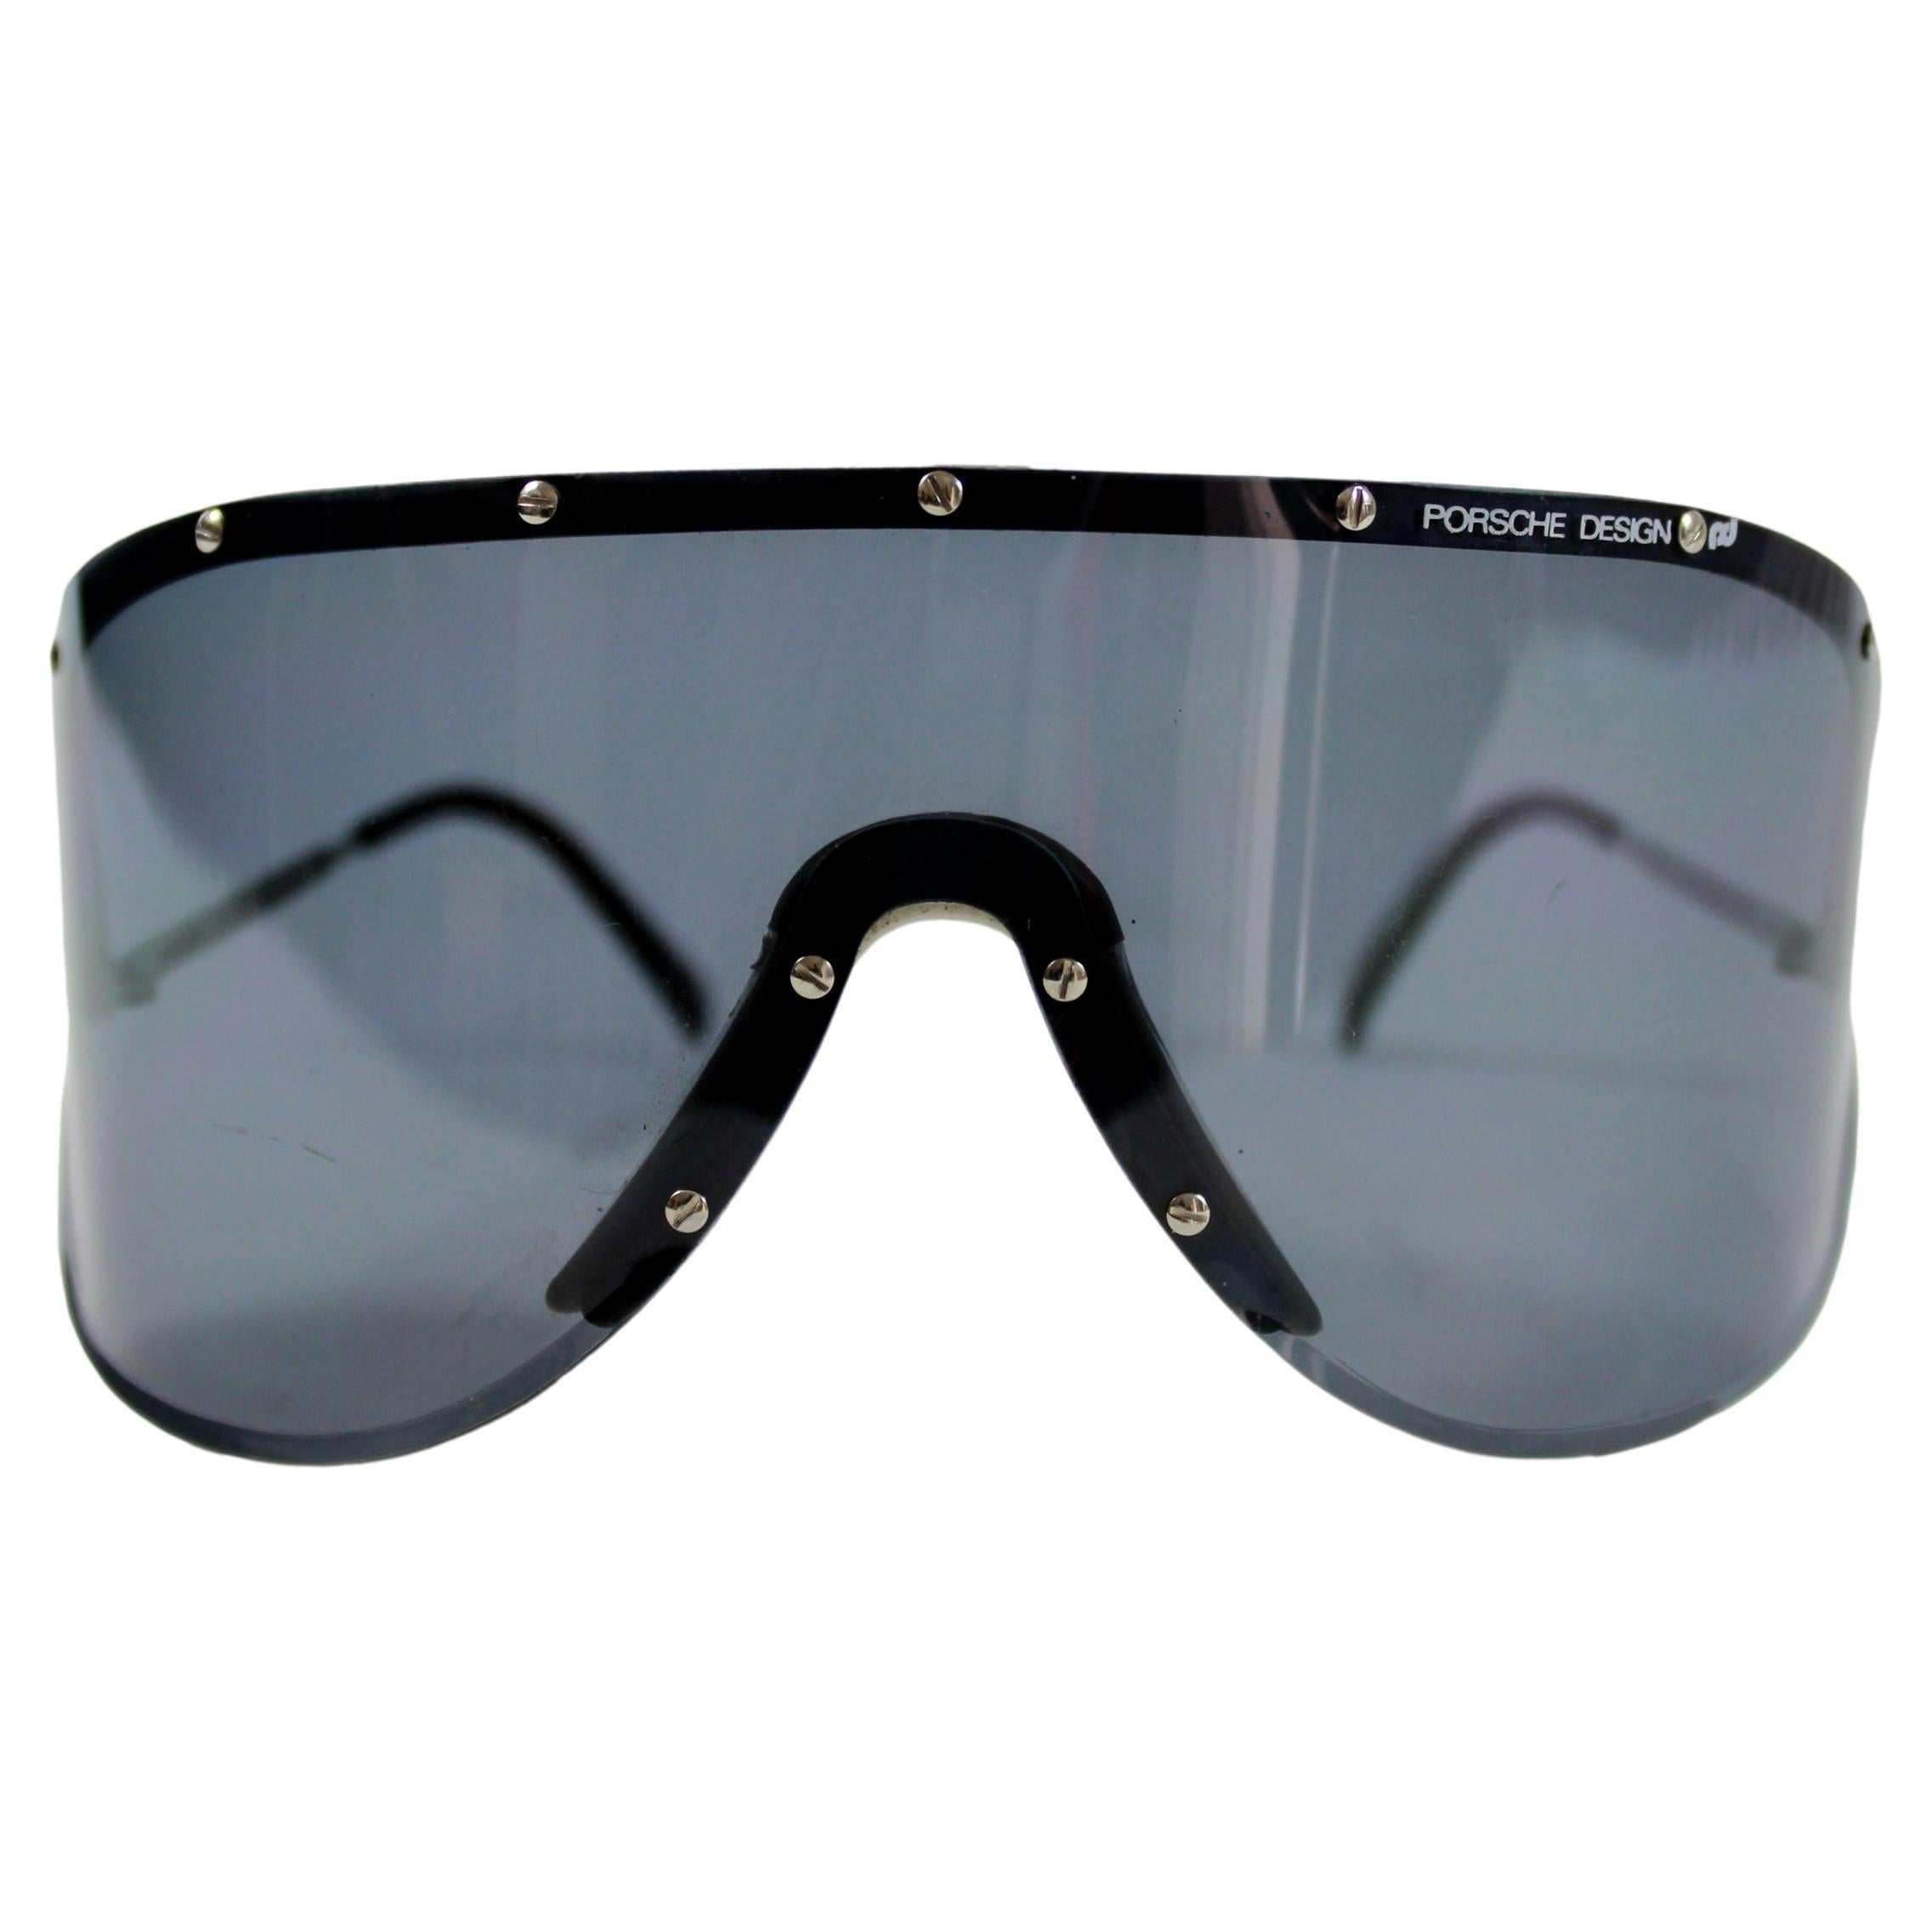 Porsche Design Yoko Ono Titanium 5620 70 Sunglasses 80s